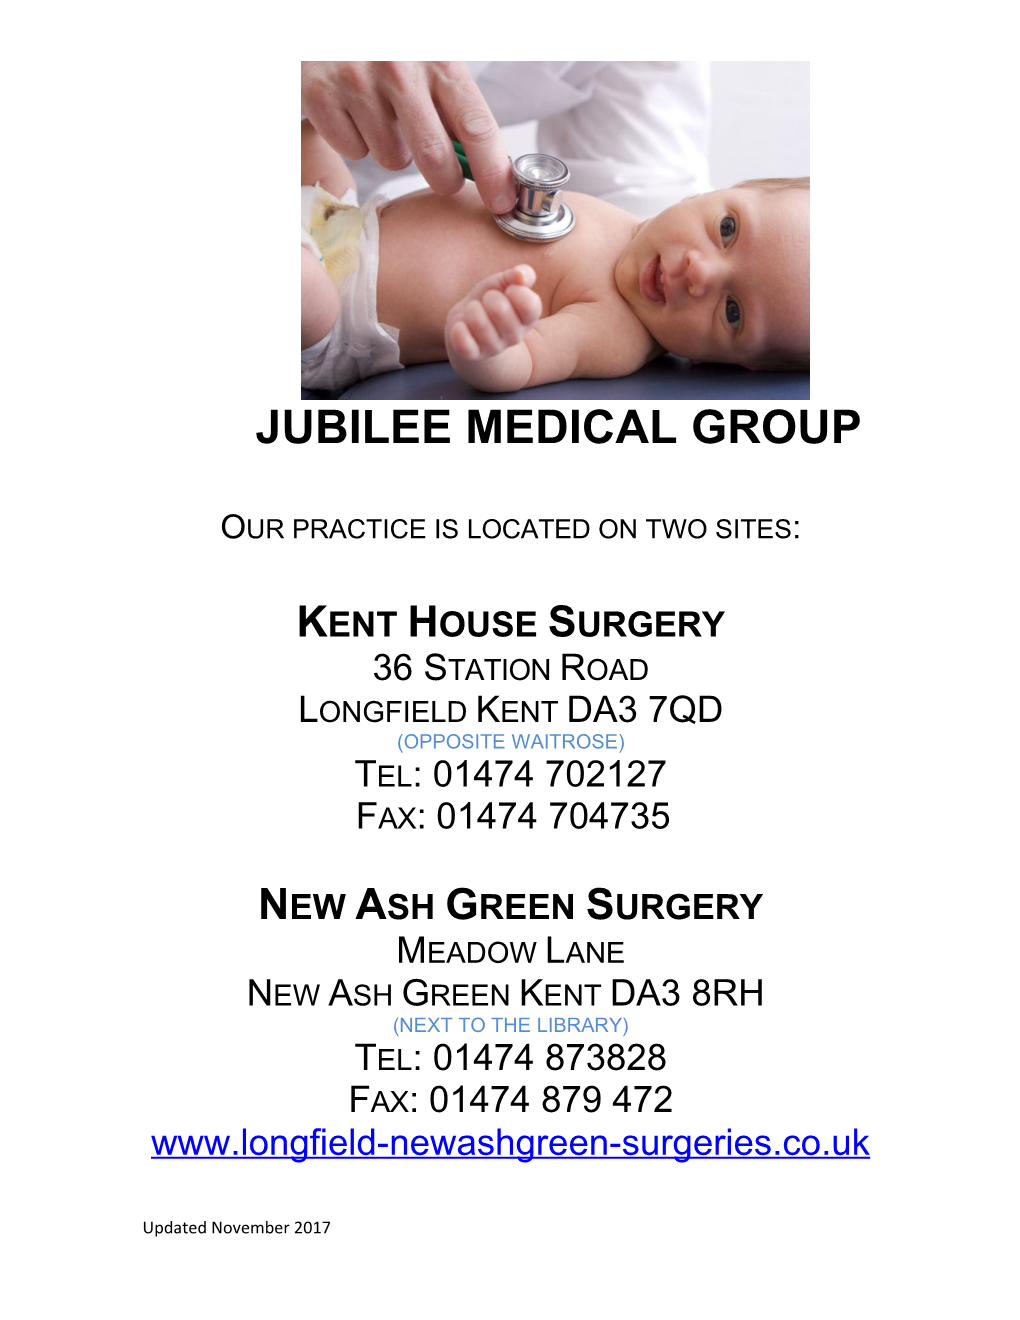 Jubilee Medical Group